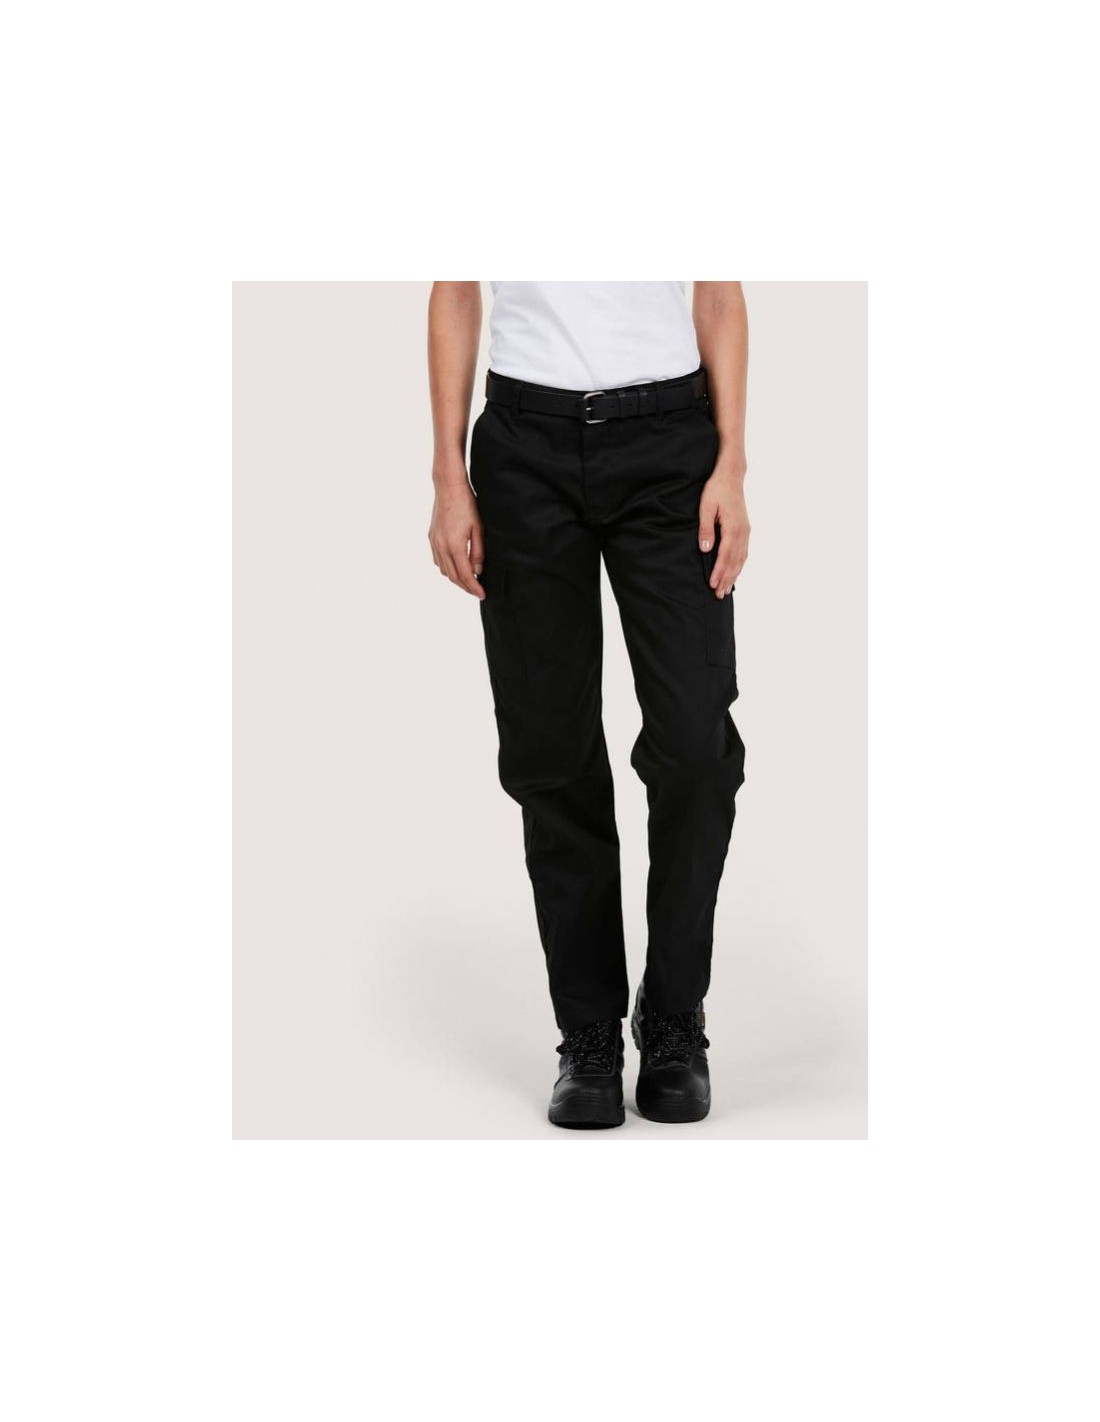 Mens Workwear Trousers Plain Pants Uneek Driver Warehouse Classic Security  Pants | eBay